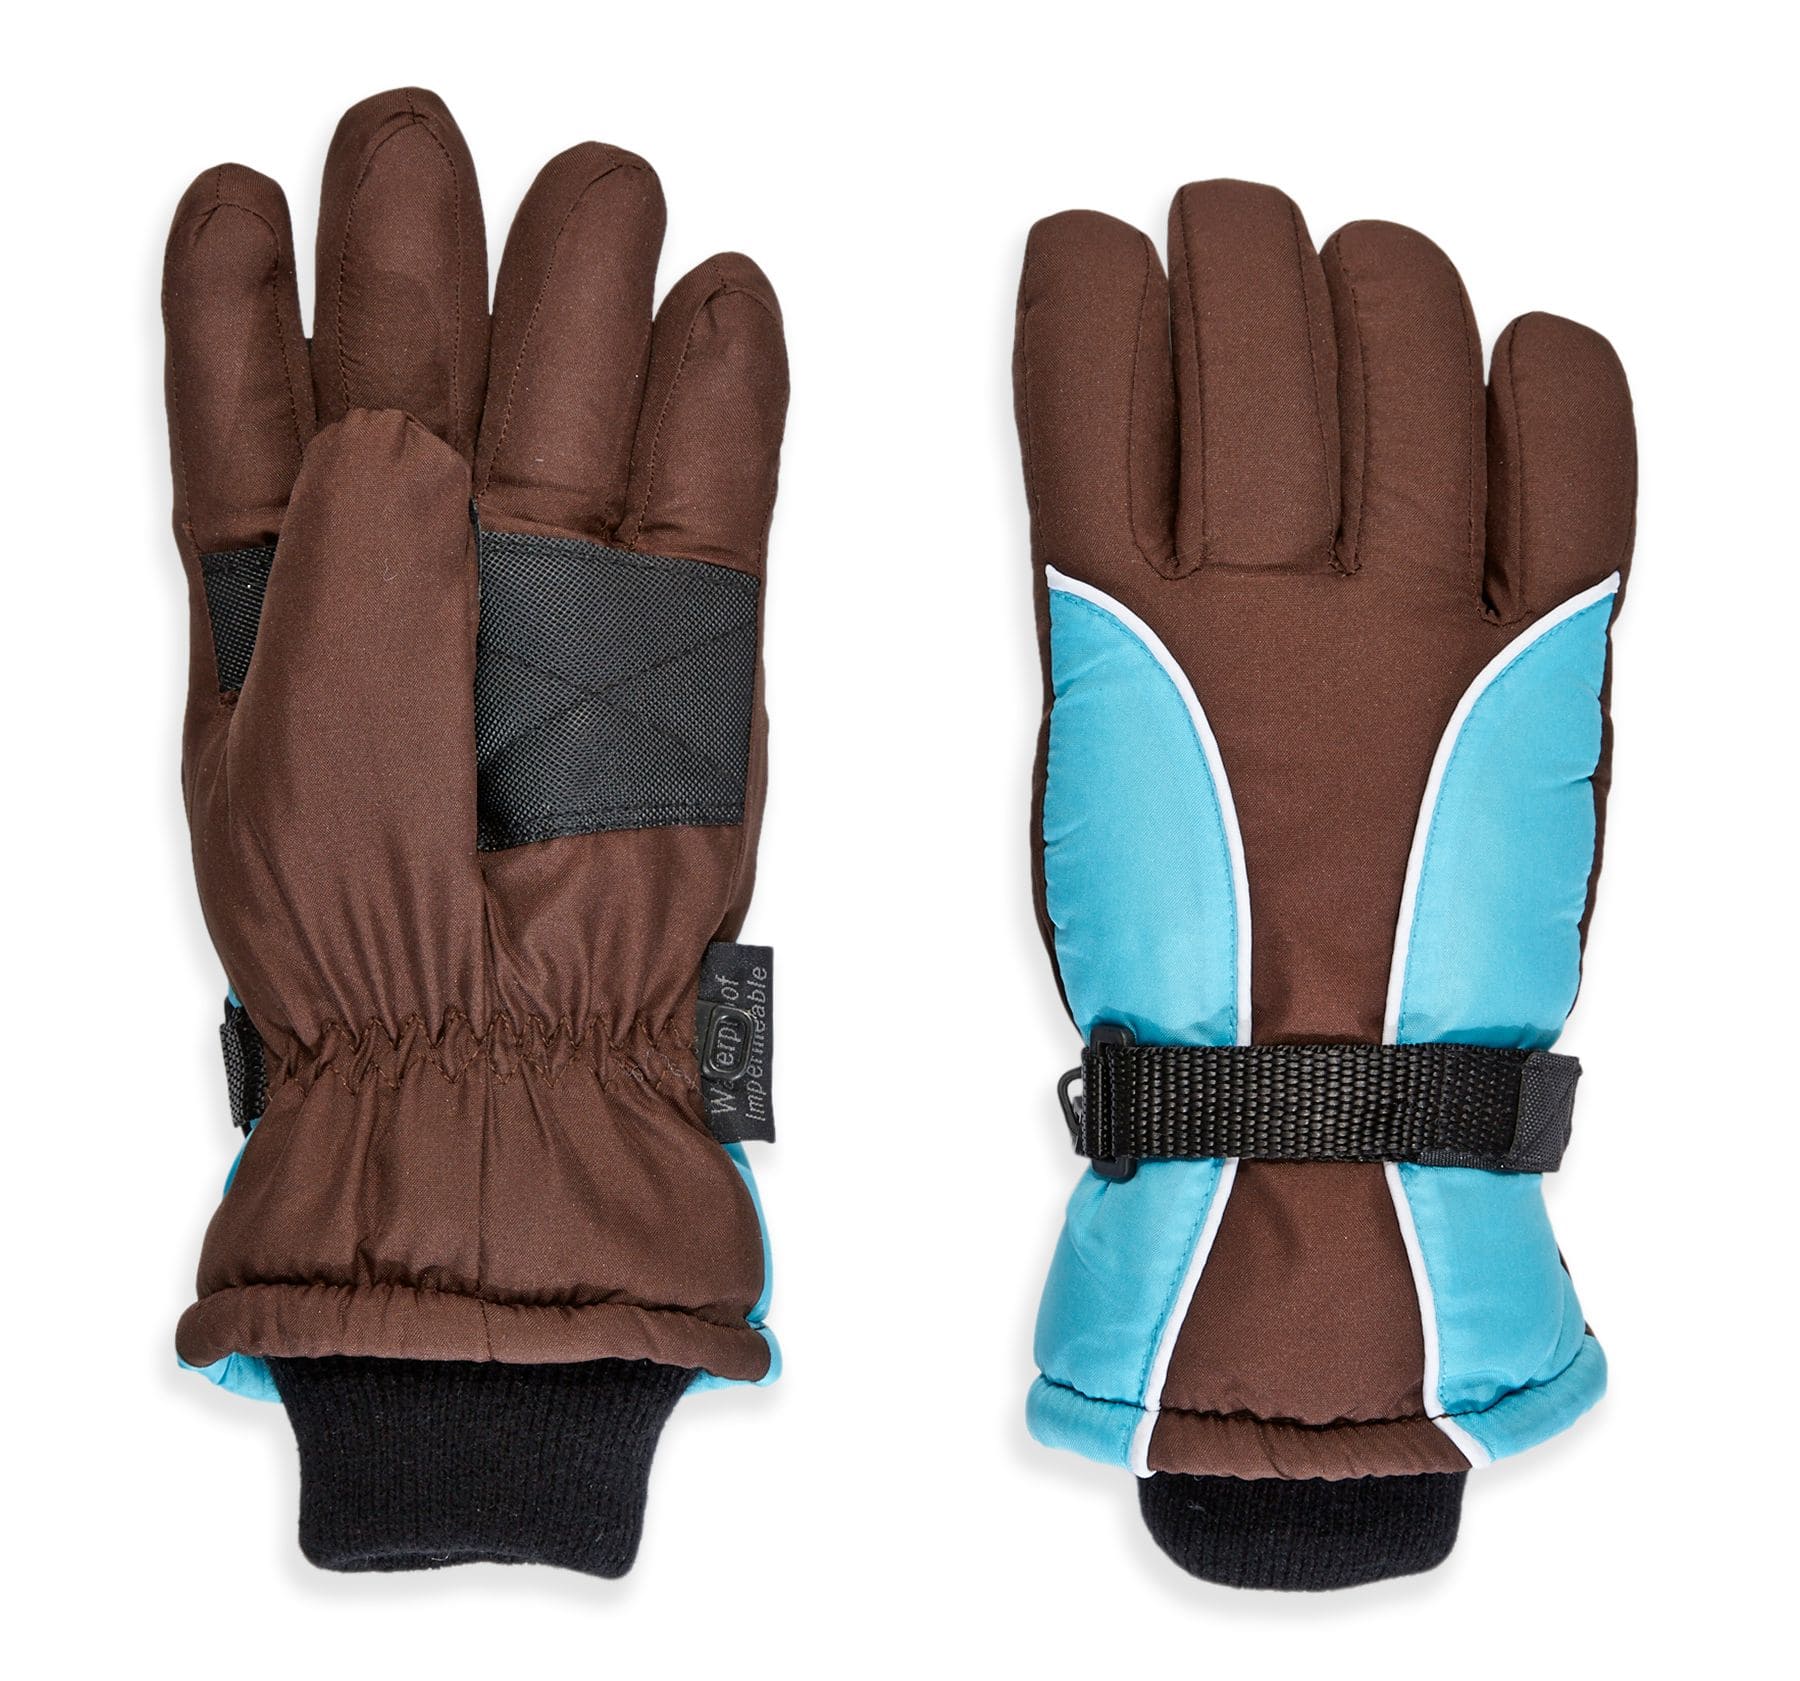 OPP Kids Winterproof Thermal Insulated Winter Ski Snowboard Gloves  Water-Resistant, Brown